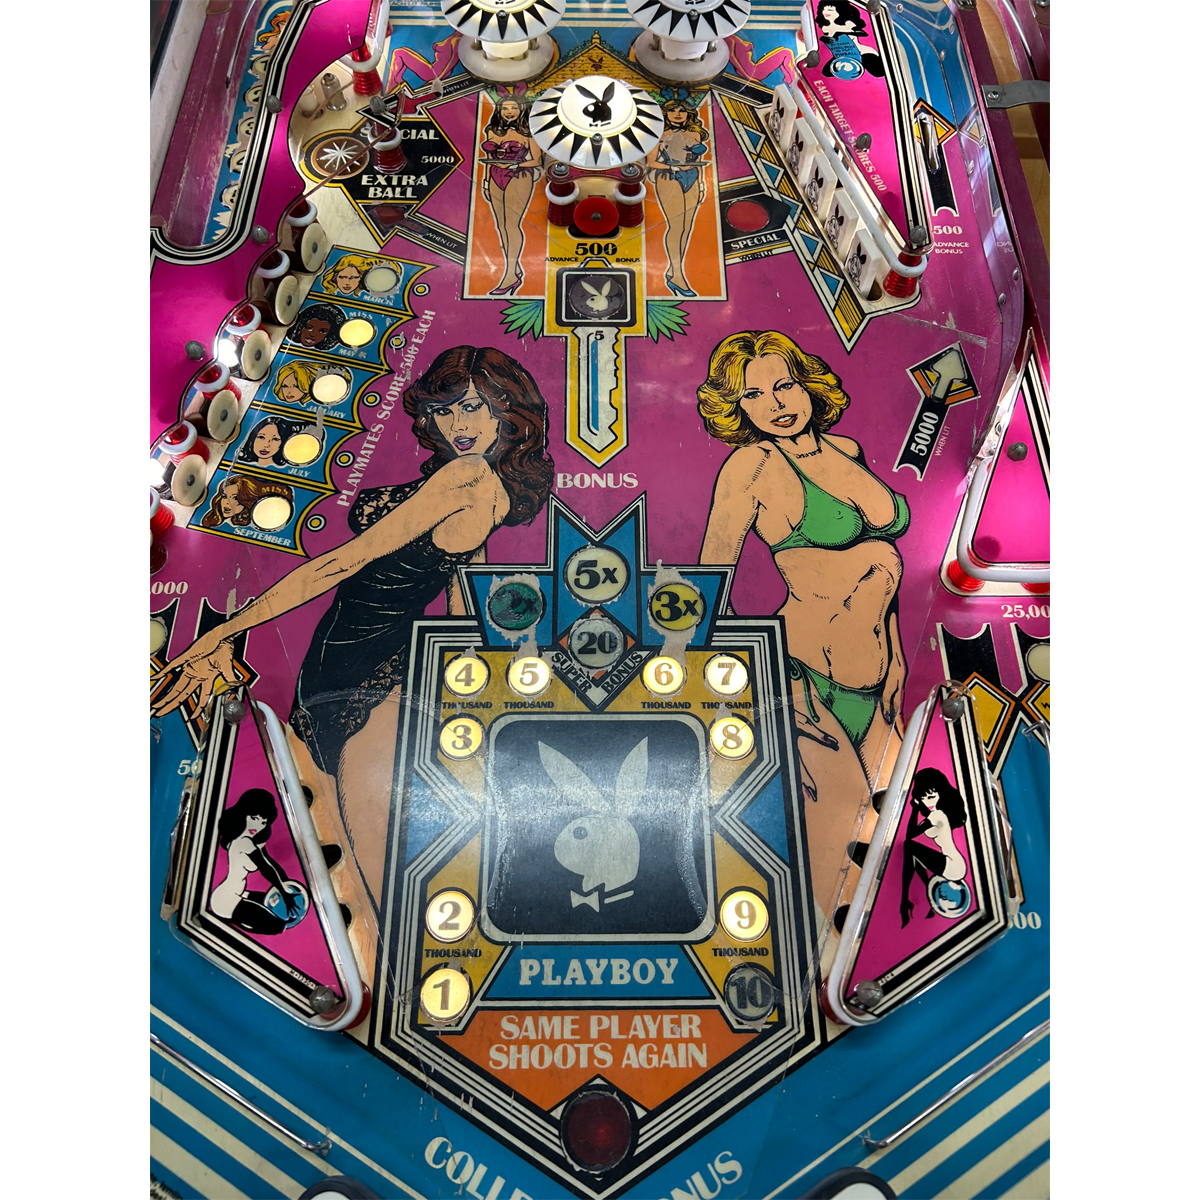 Bally Playboy Pinball Machine 8